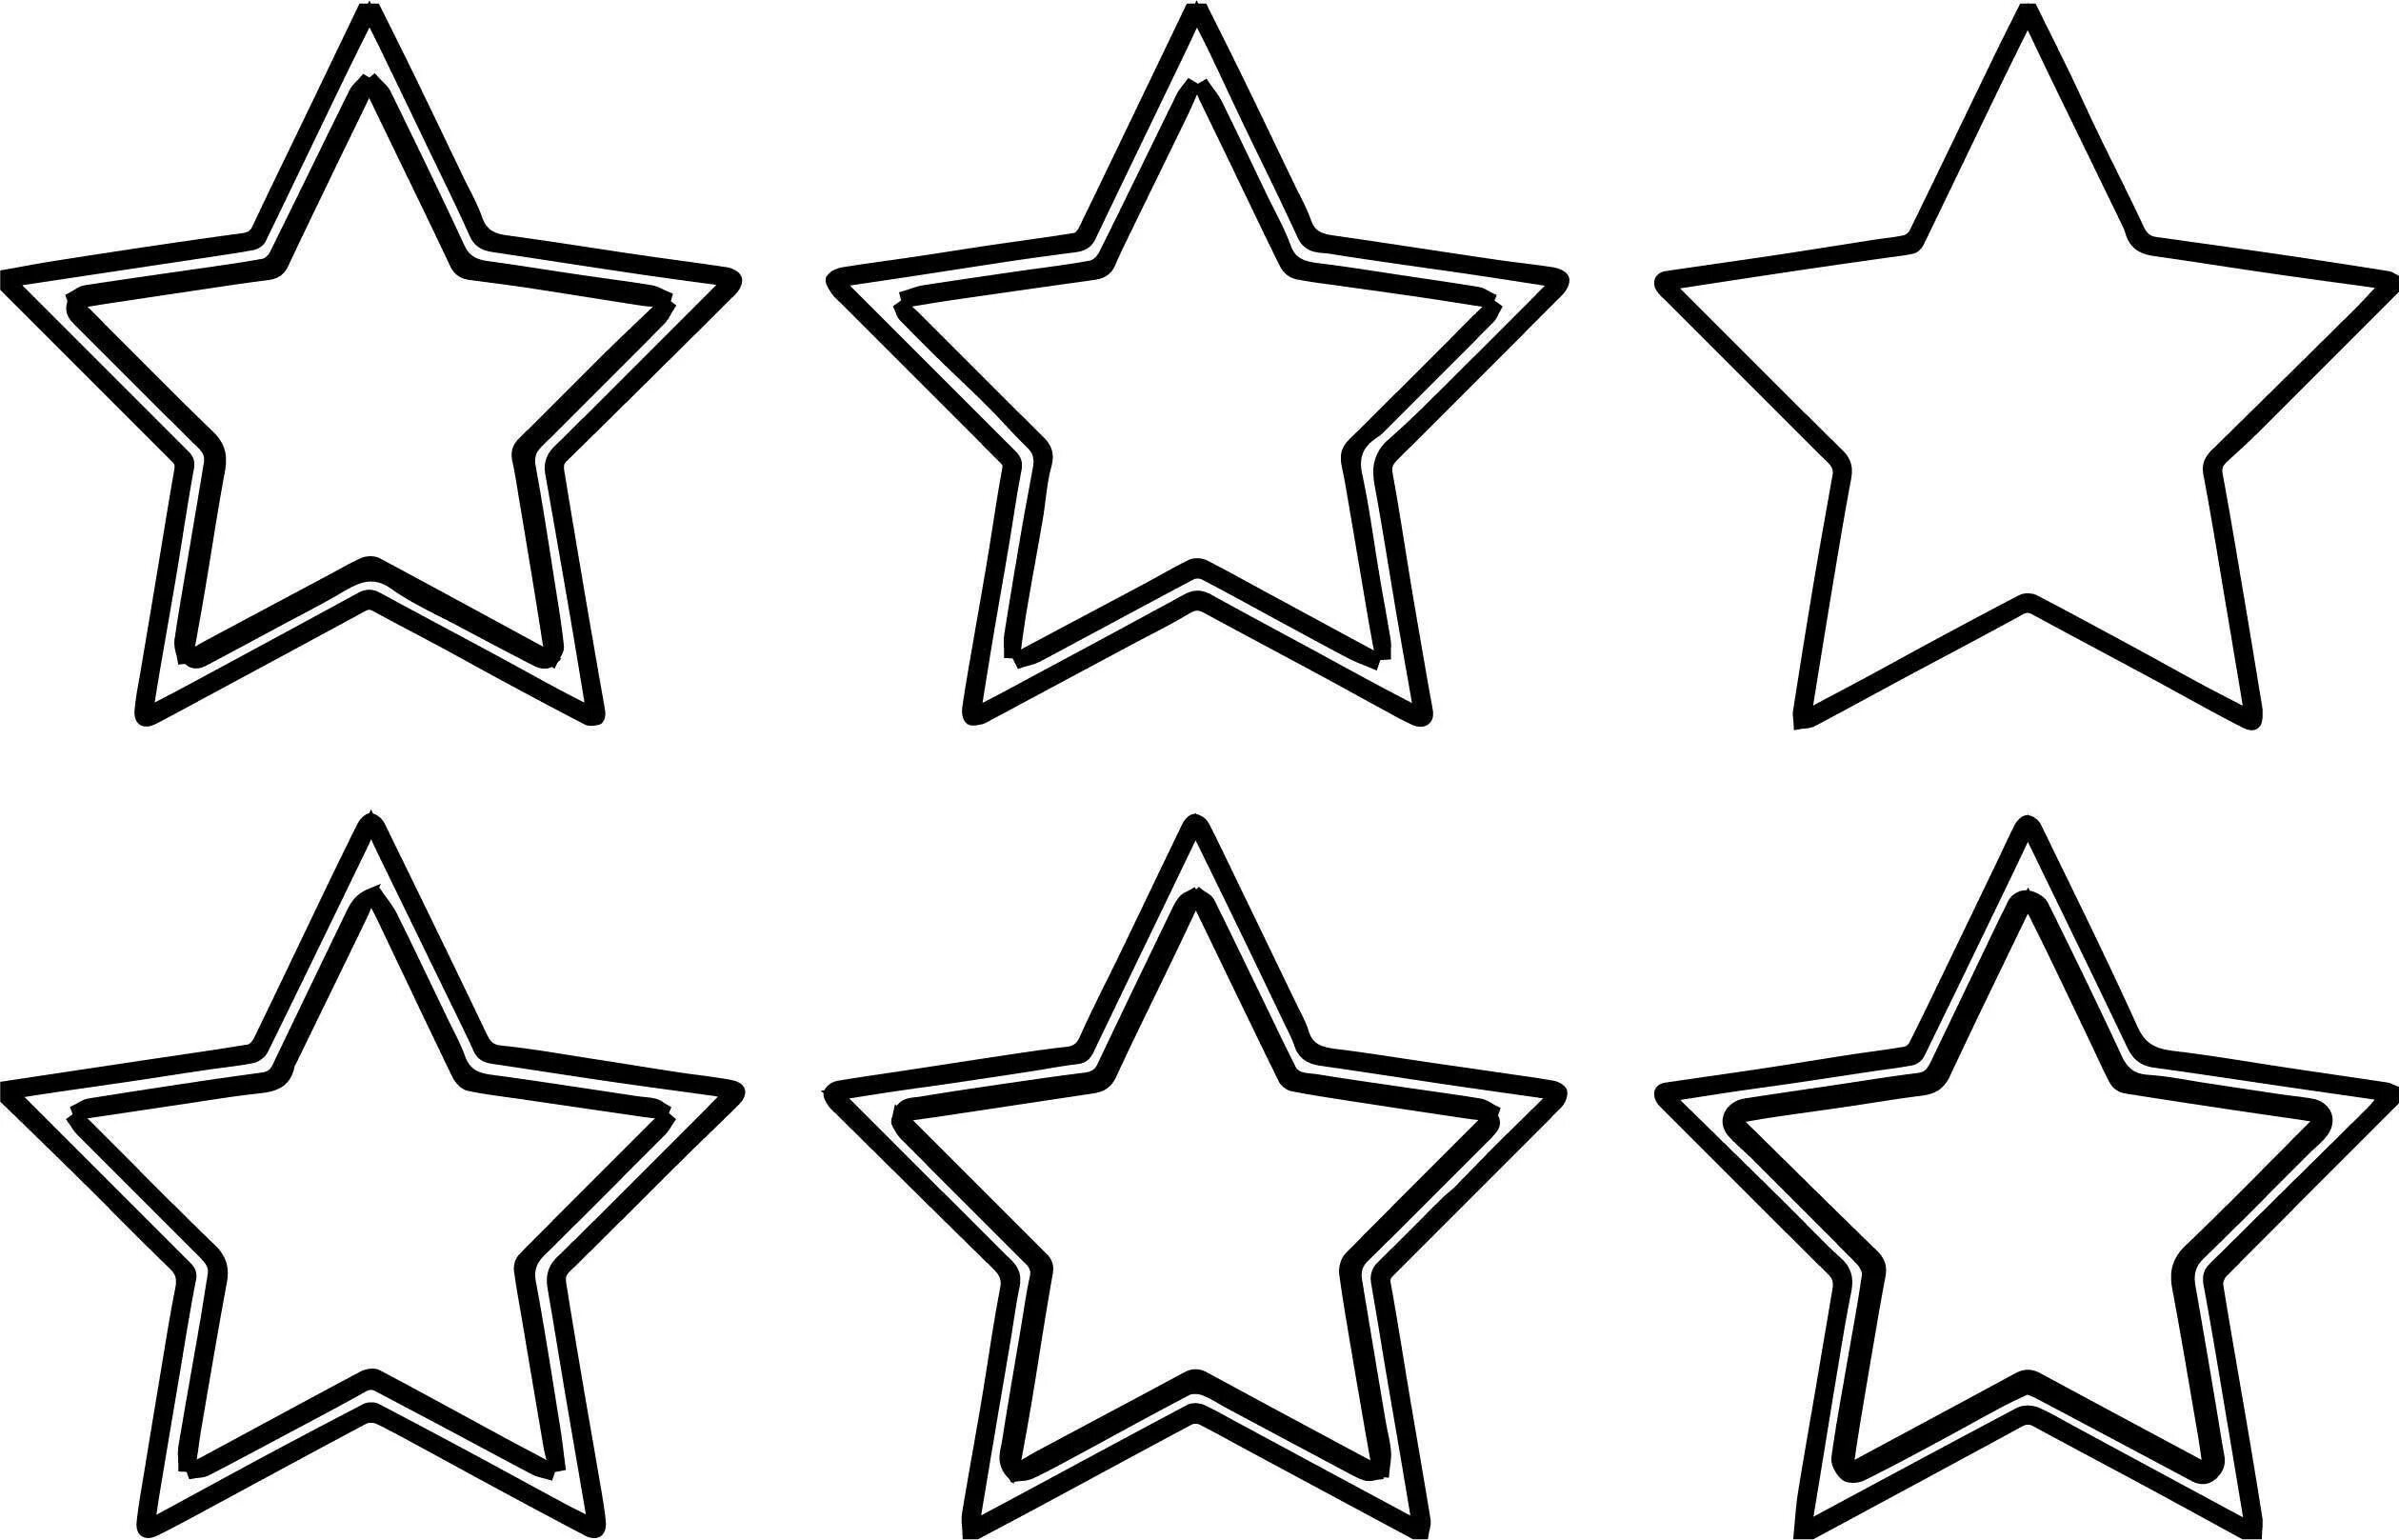 Star pattern #2